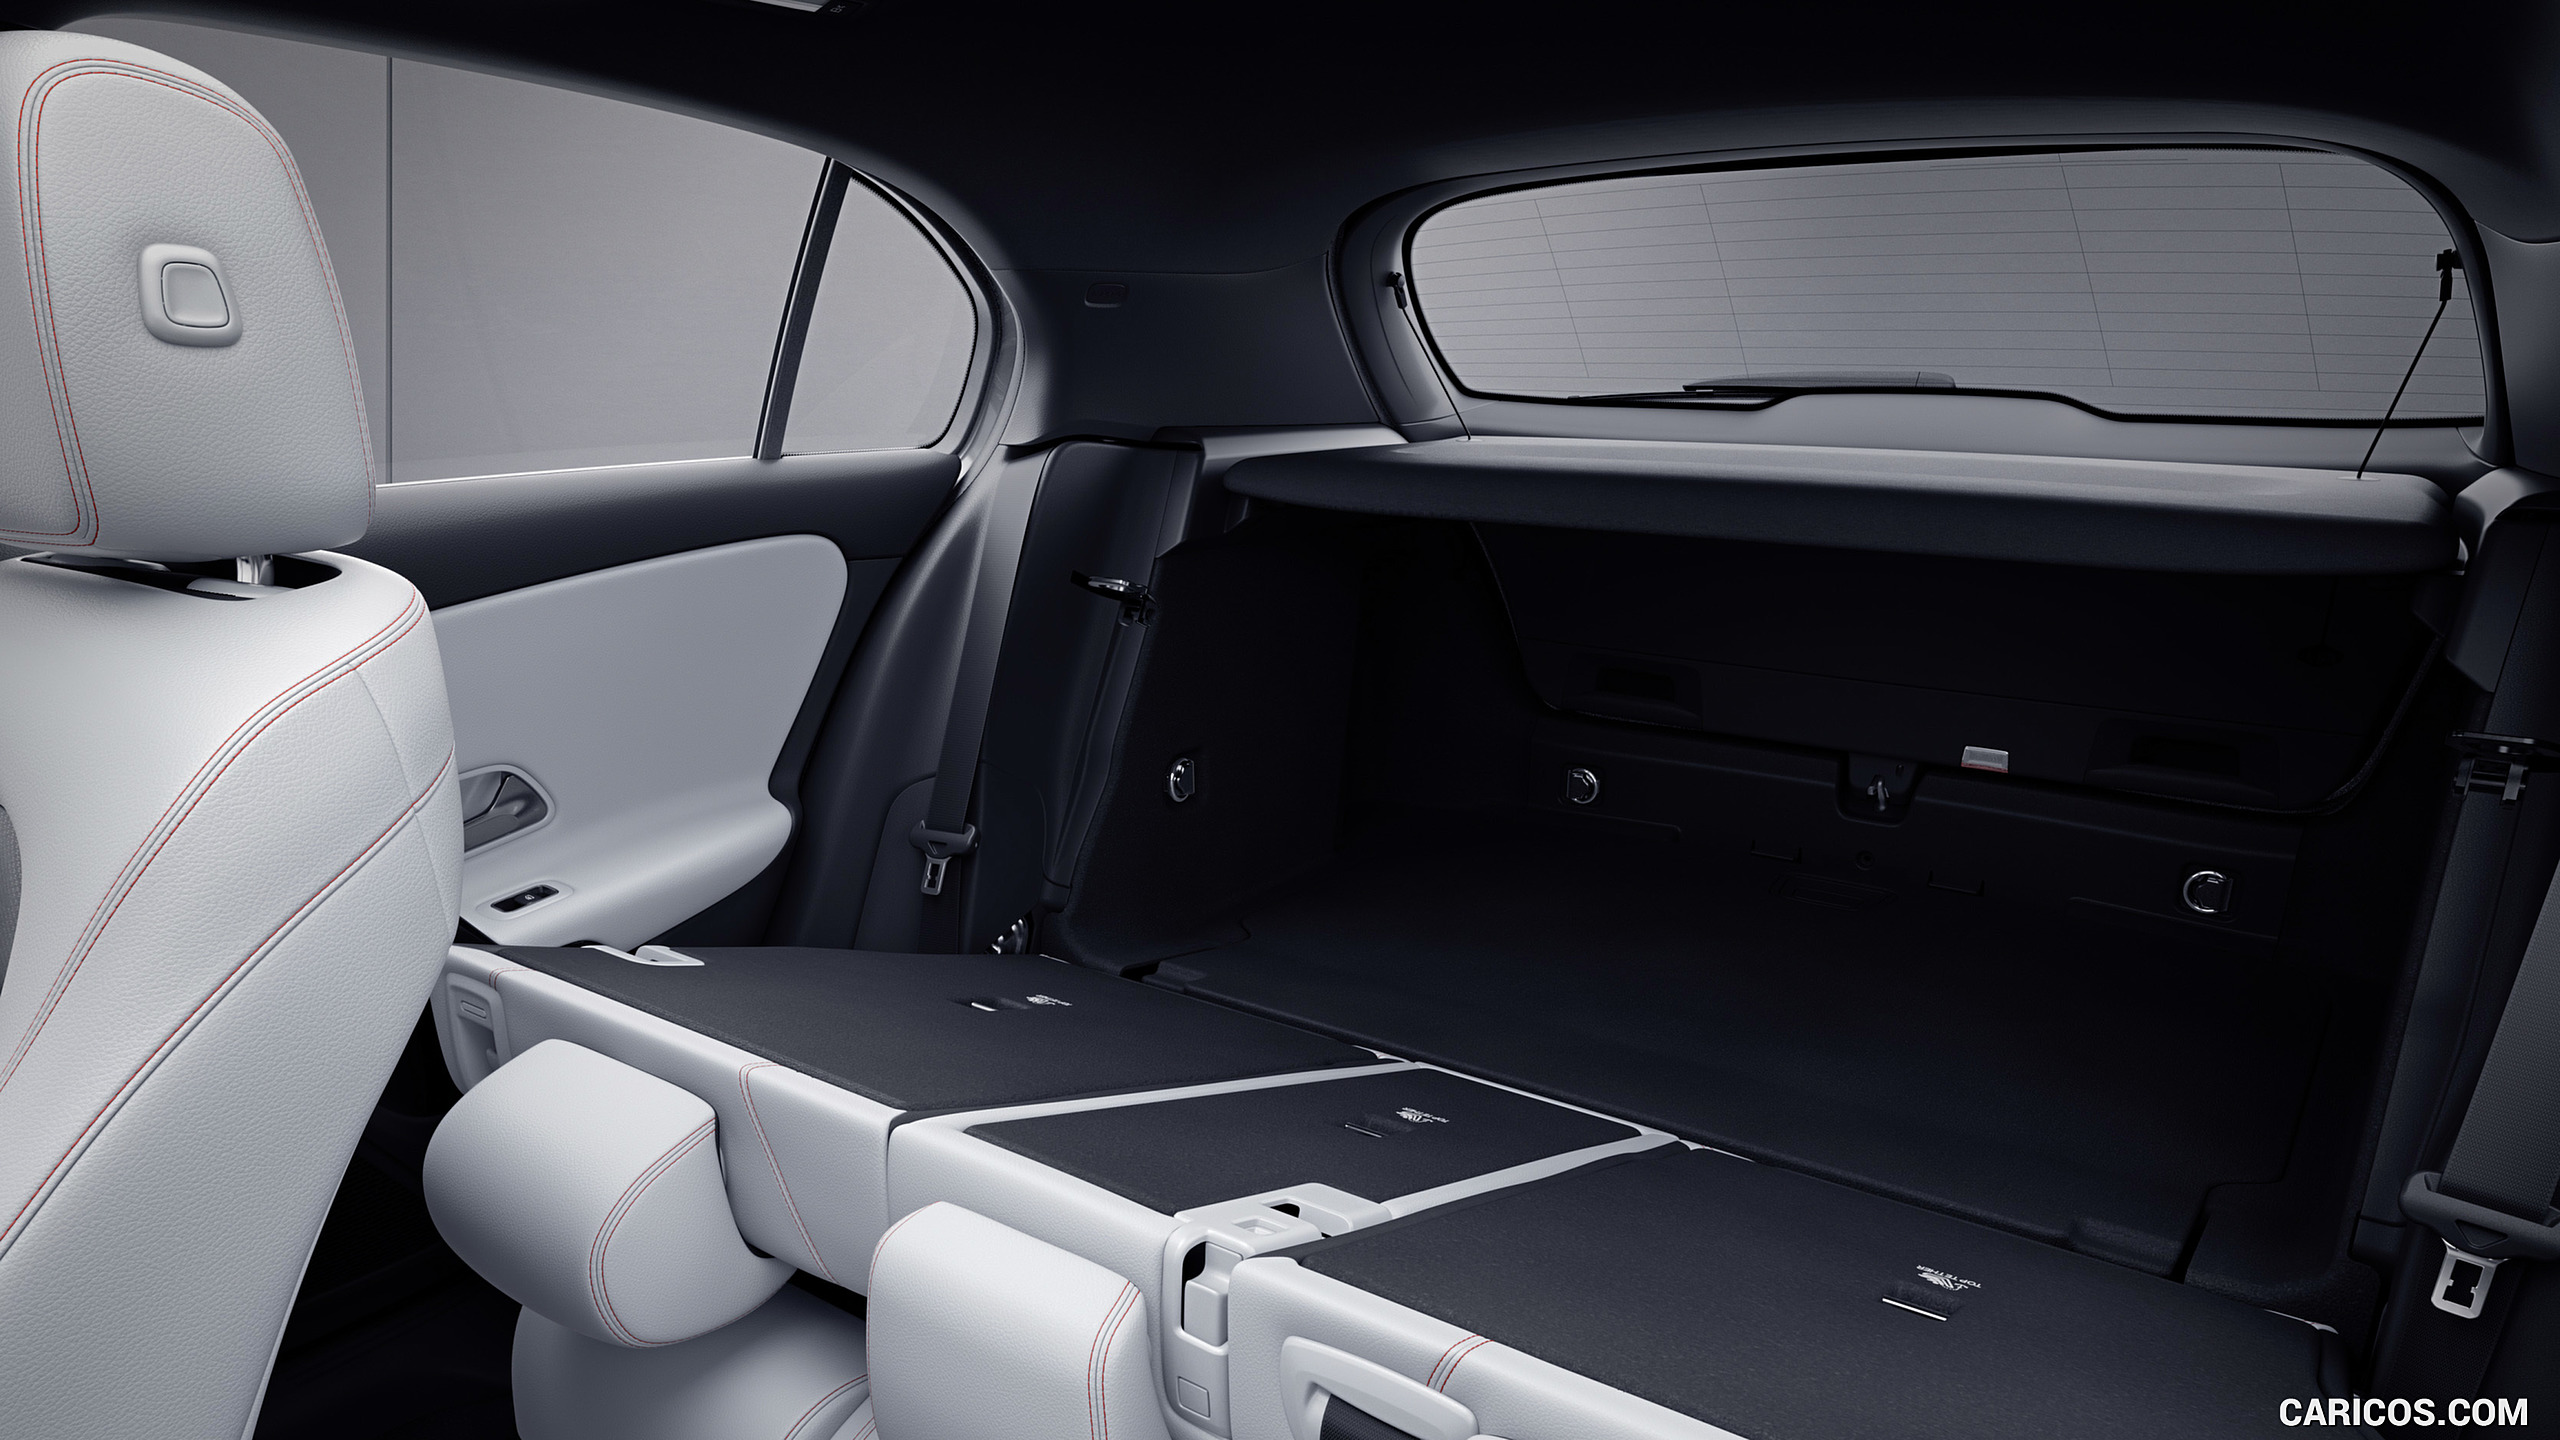 2019 Mercedes-Benz A-Class - Interior, Rear Seats, #179 of 181